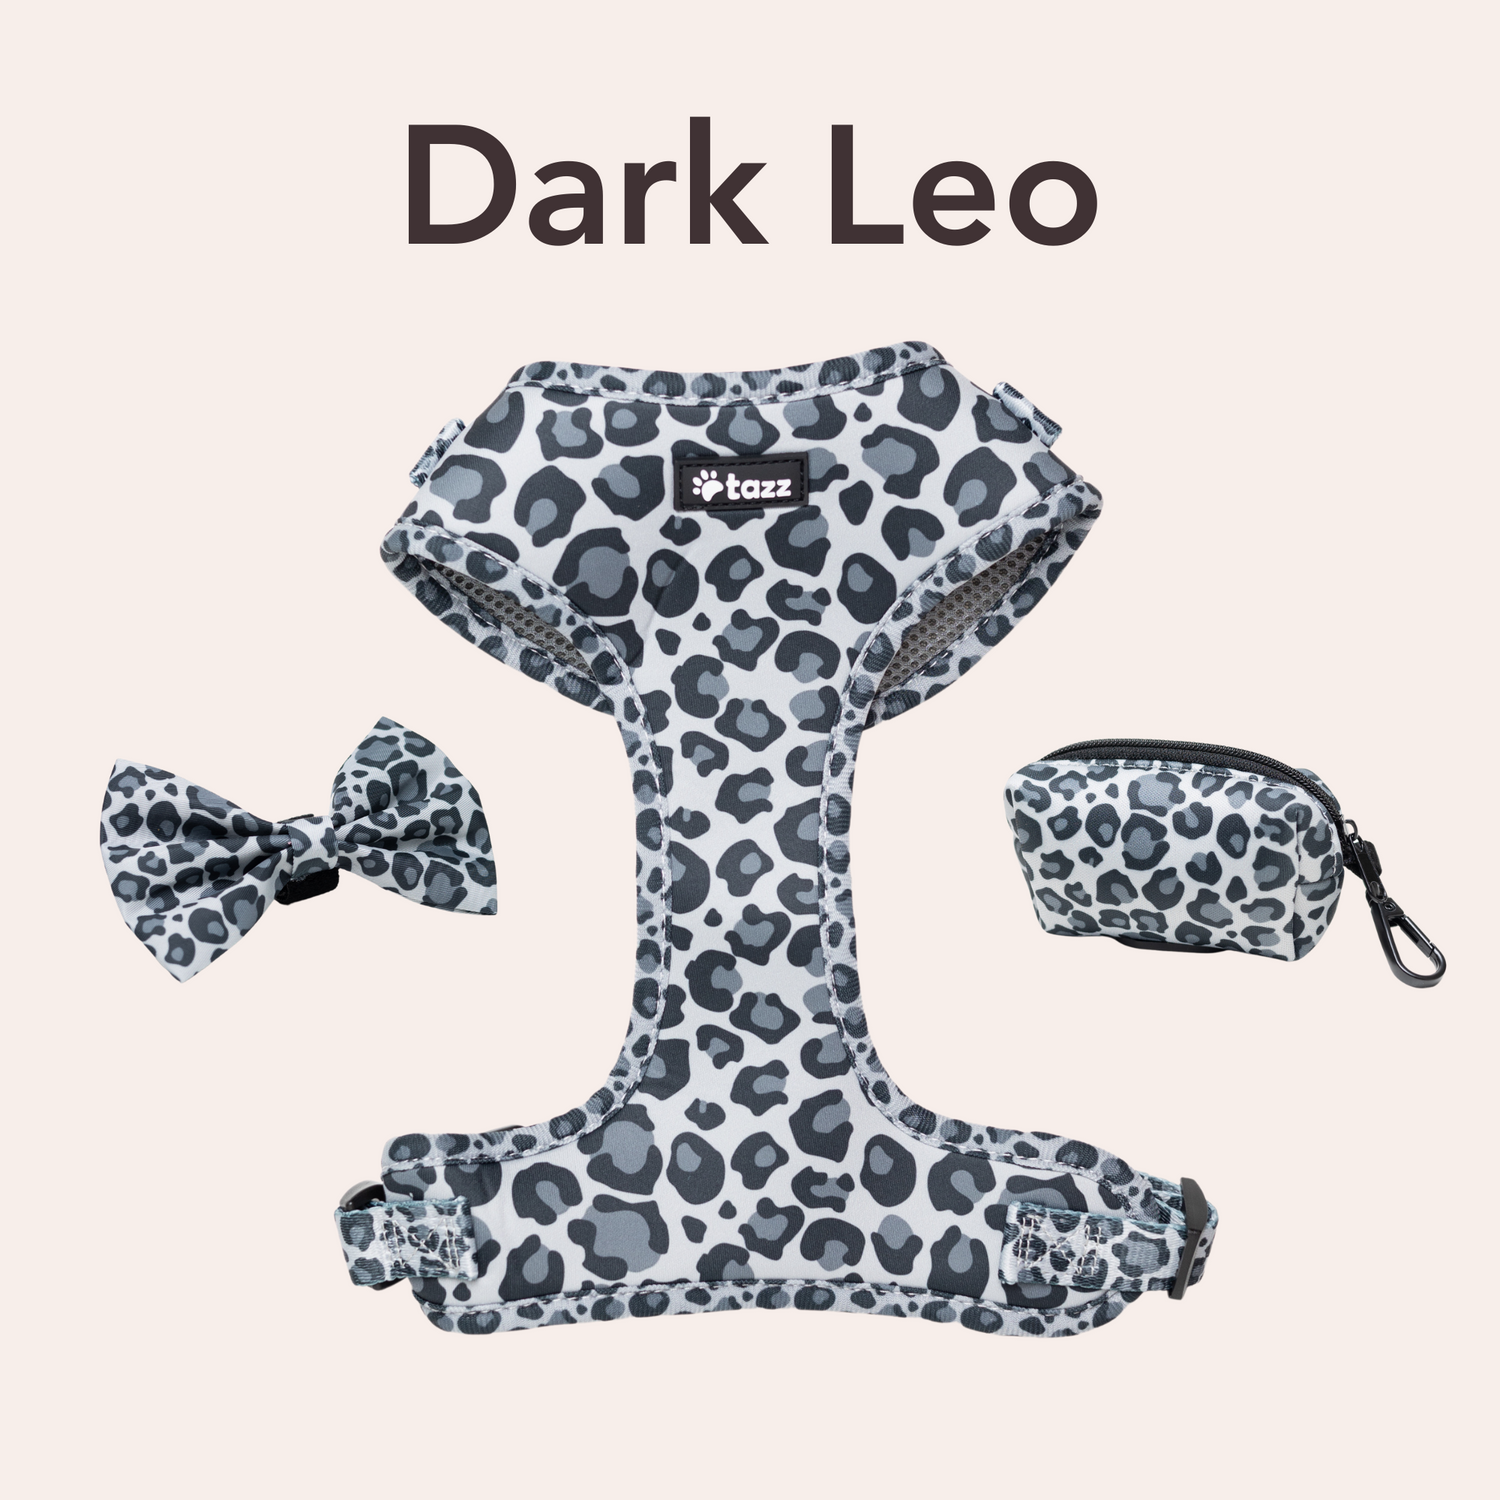 Dark Leo